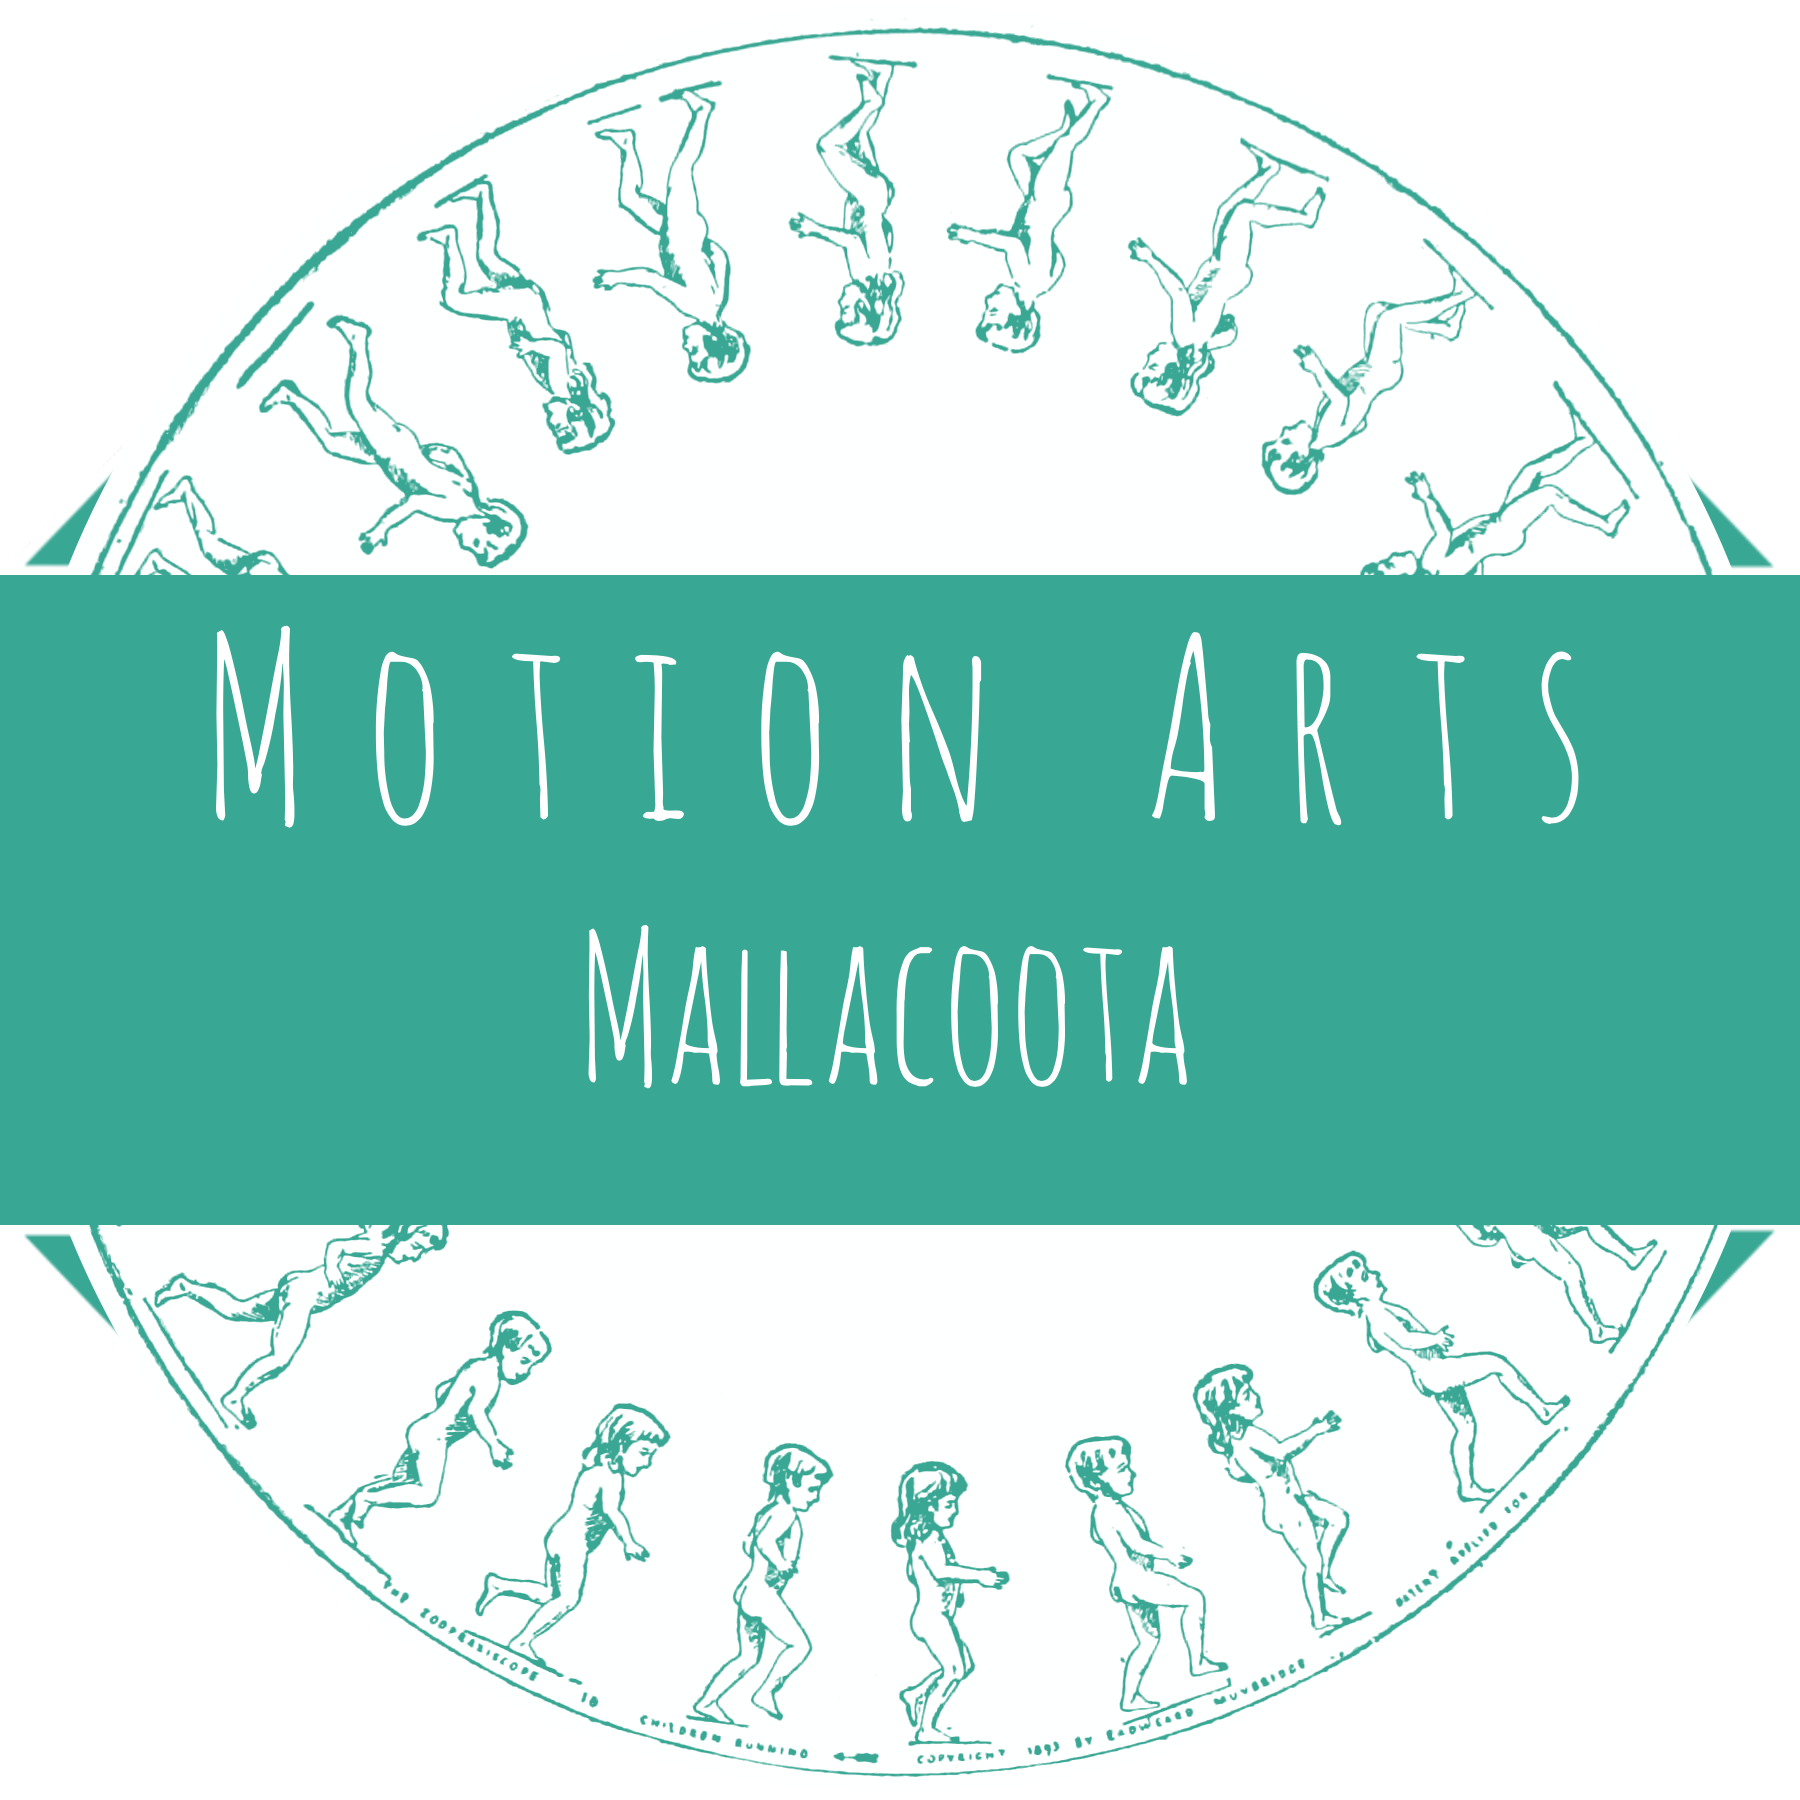 Motion Arts Mallacoota